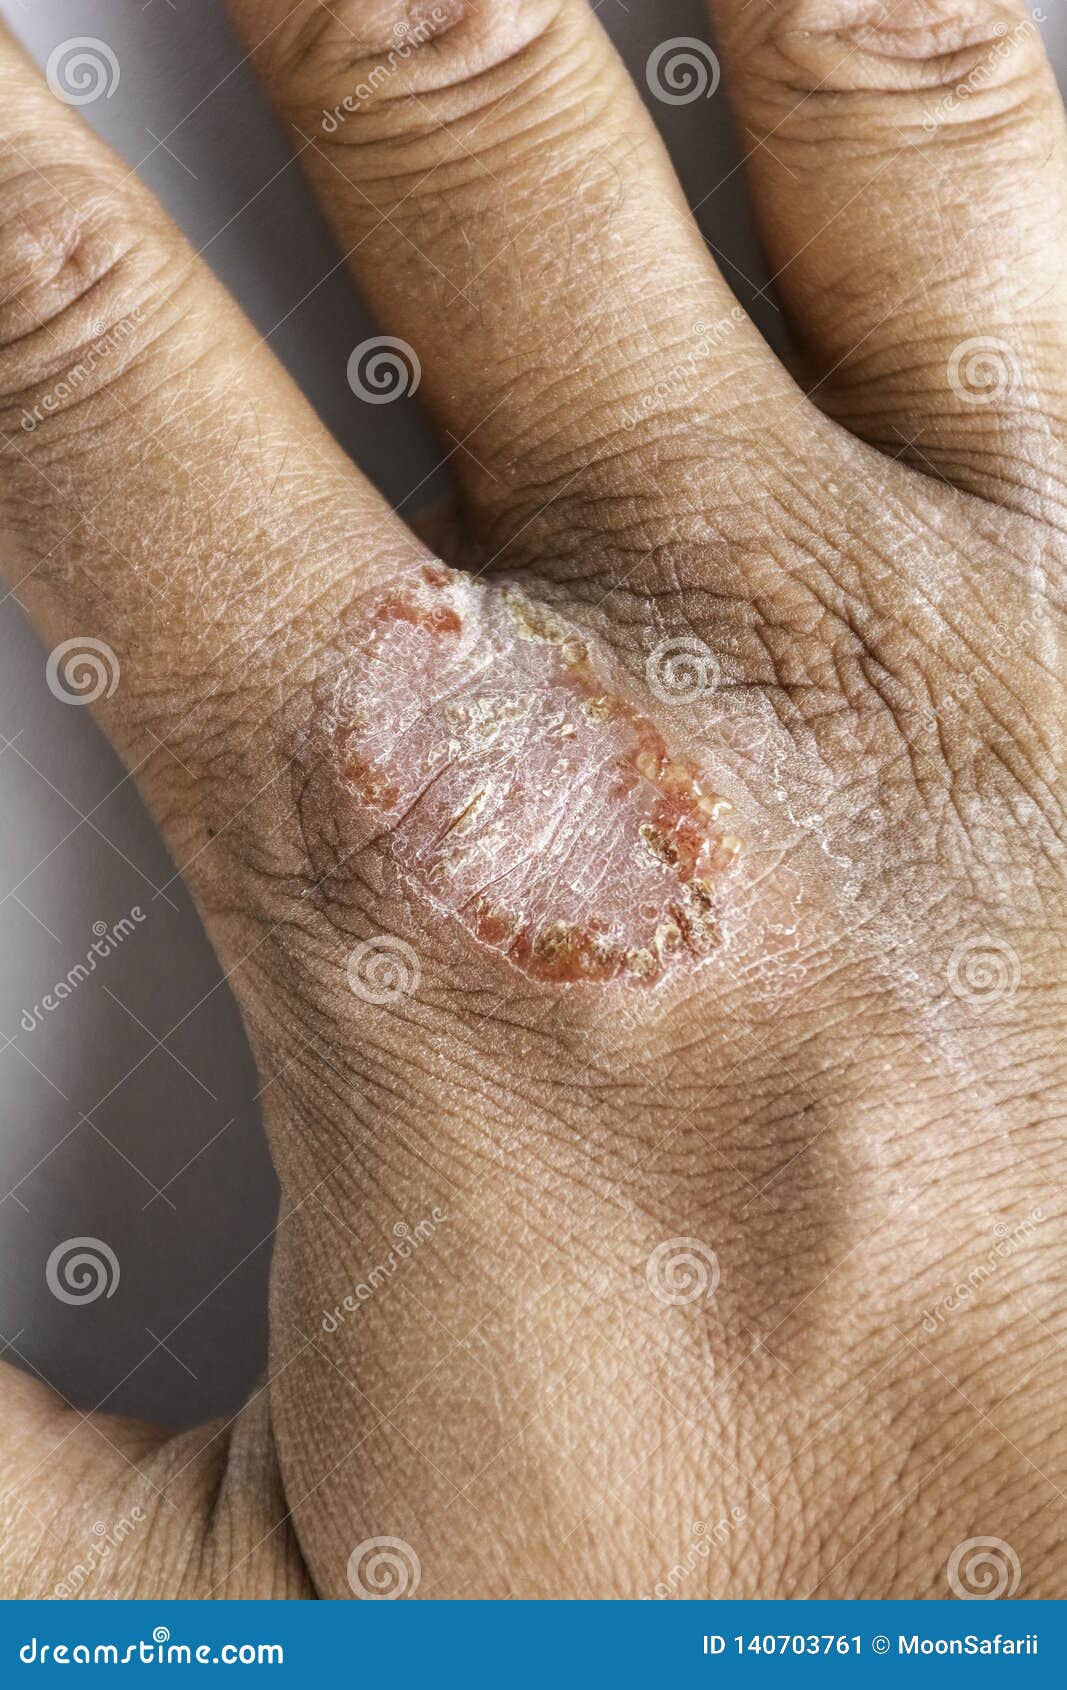 Hand With Atopic Dermatitis Eczema Psoriasis Vulgaris Stock Image